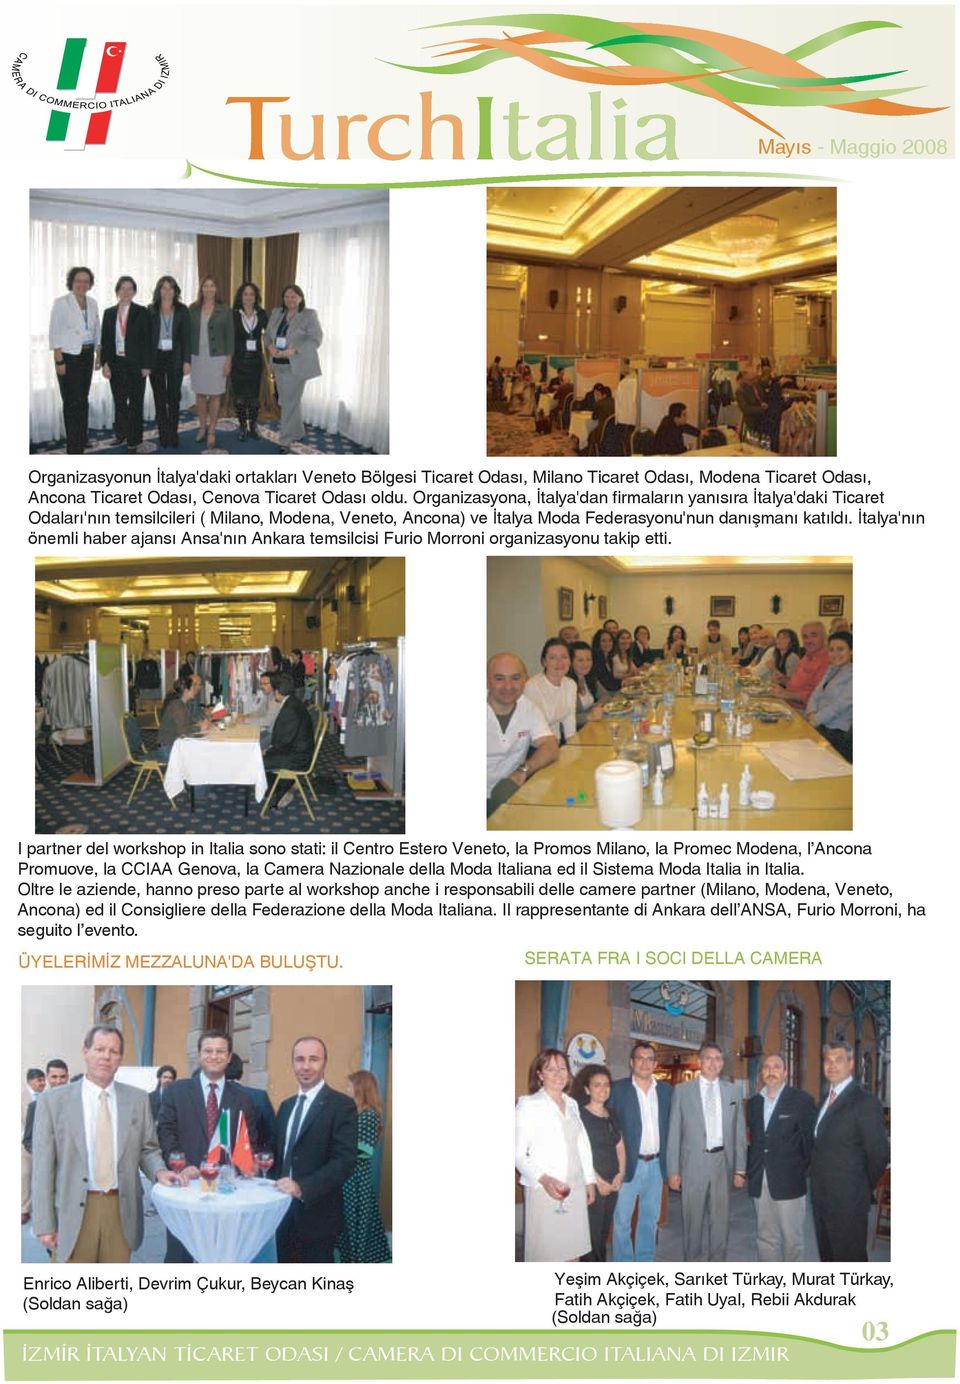 Ýtalya'nýn önemli haber ajansý Ansa'nýn Ankara temsilcisi Furio Morroni organizasyonu takip etti.